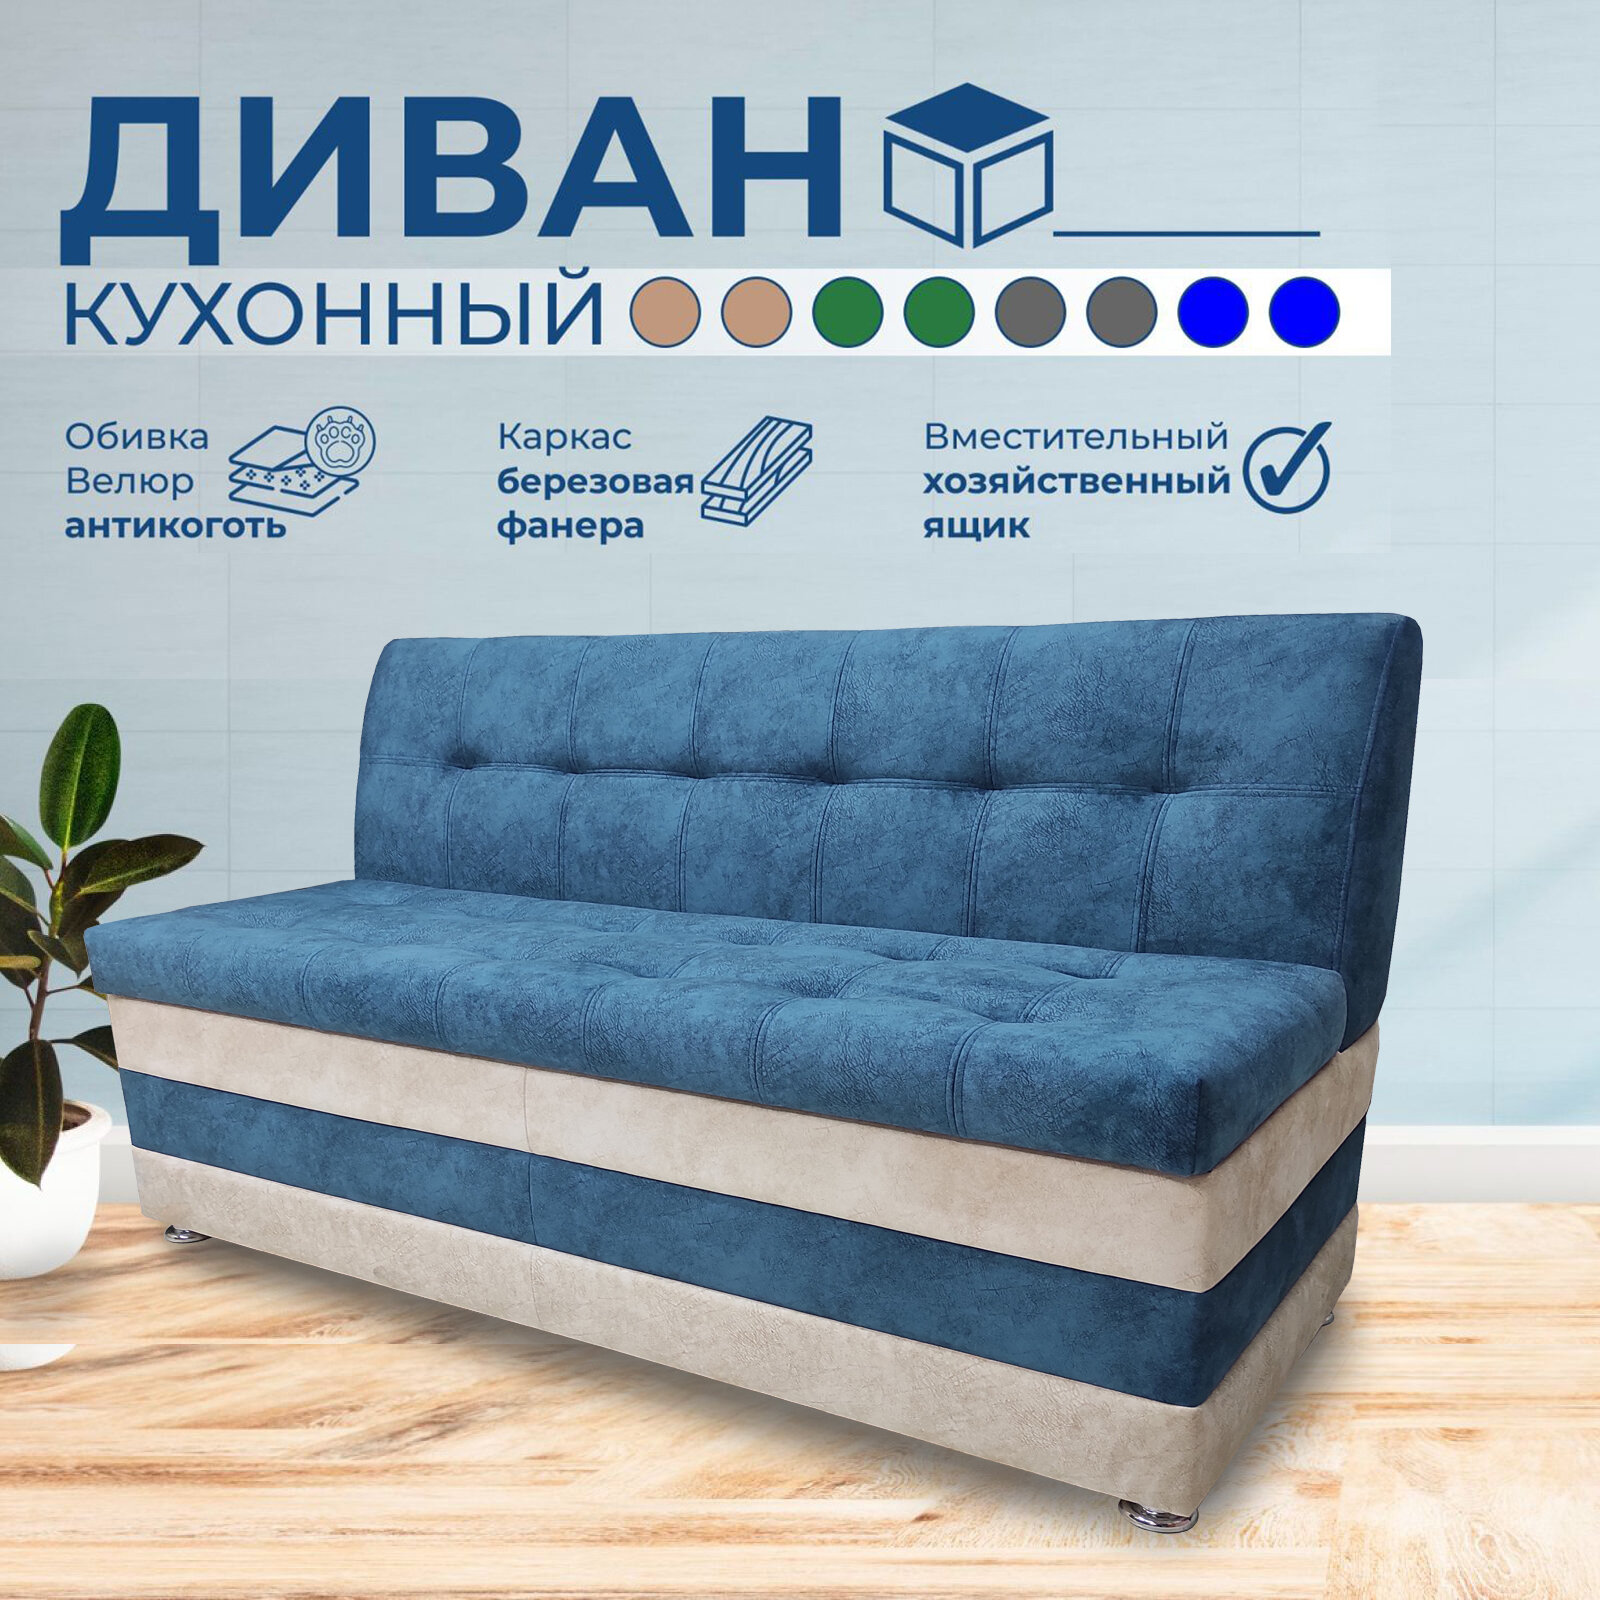 Кухонный диван Форум-5М (100см) Синий